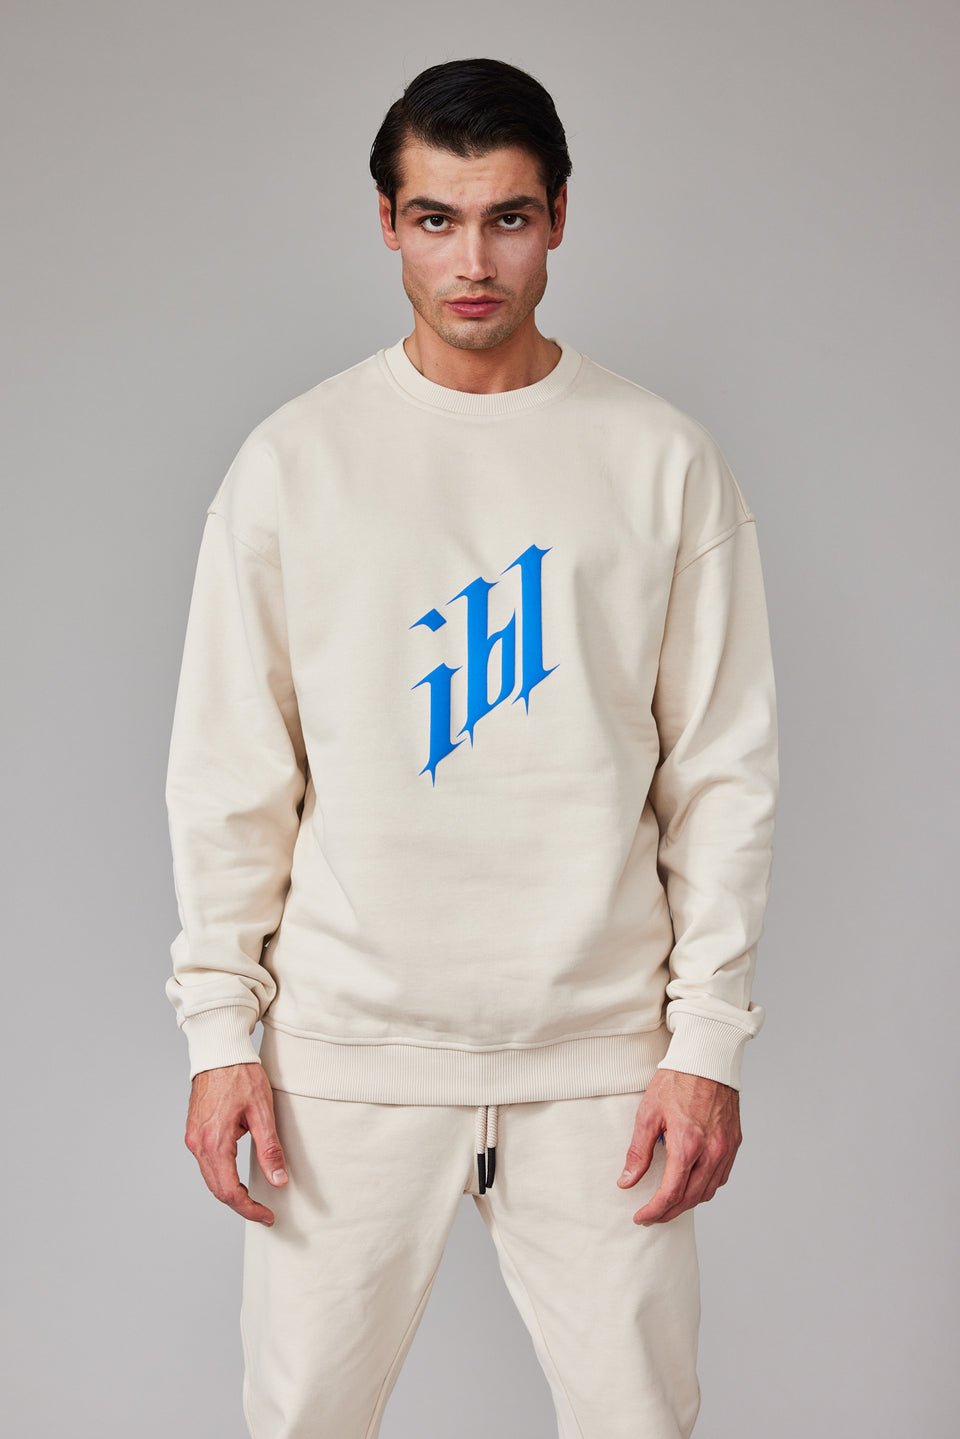 IBL Sweater - Cream